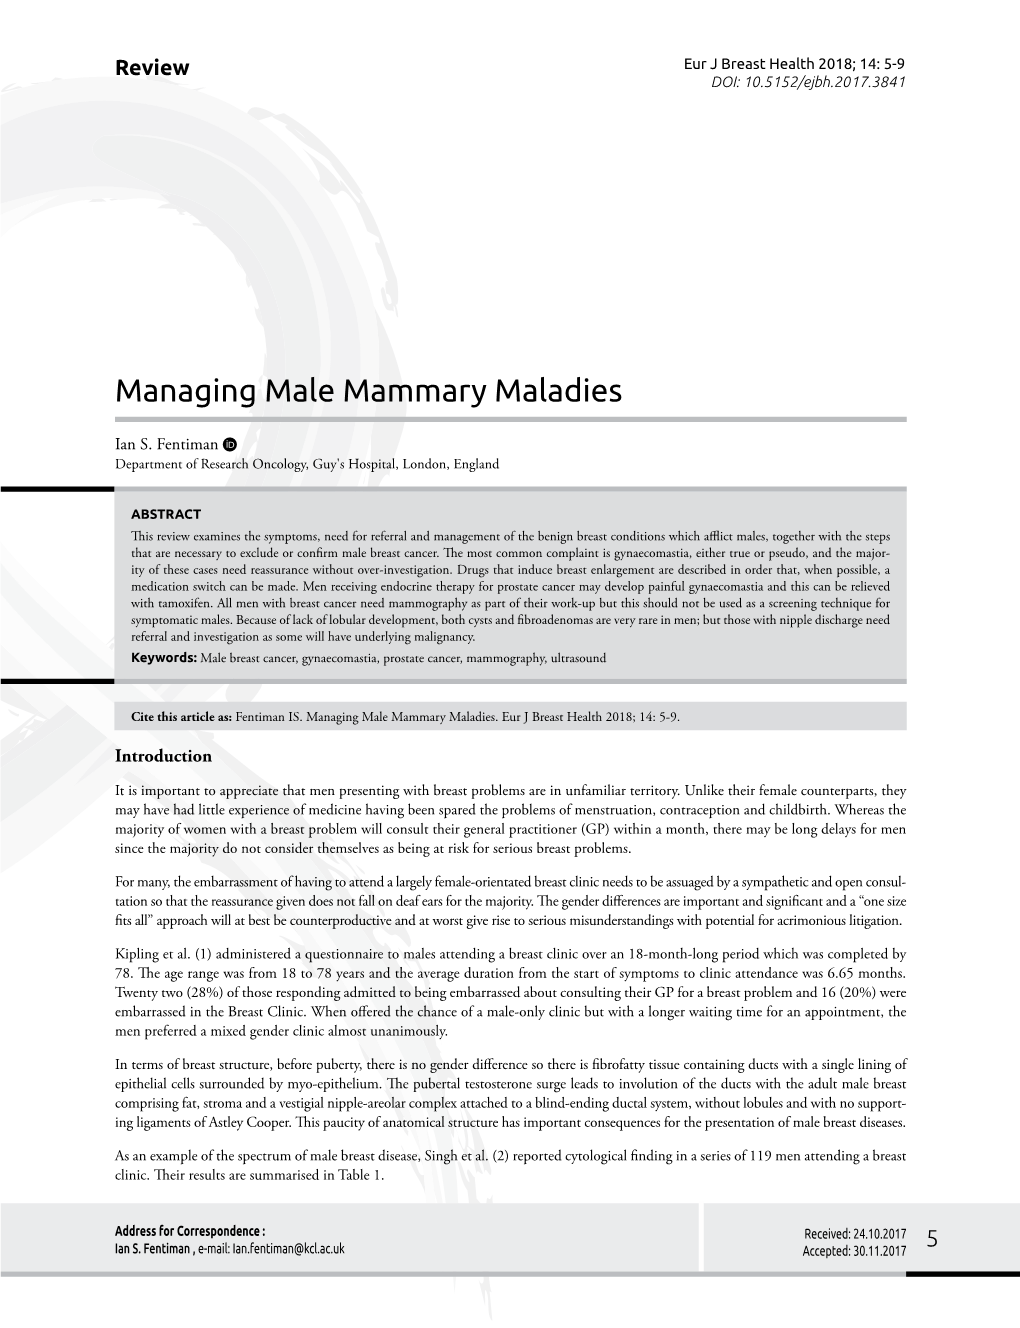 Managing Male Mammary Maladies